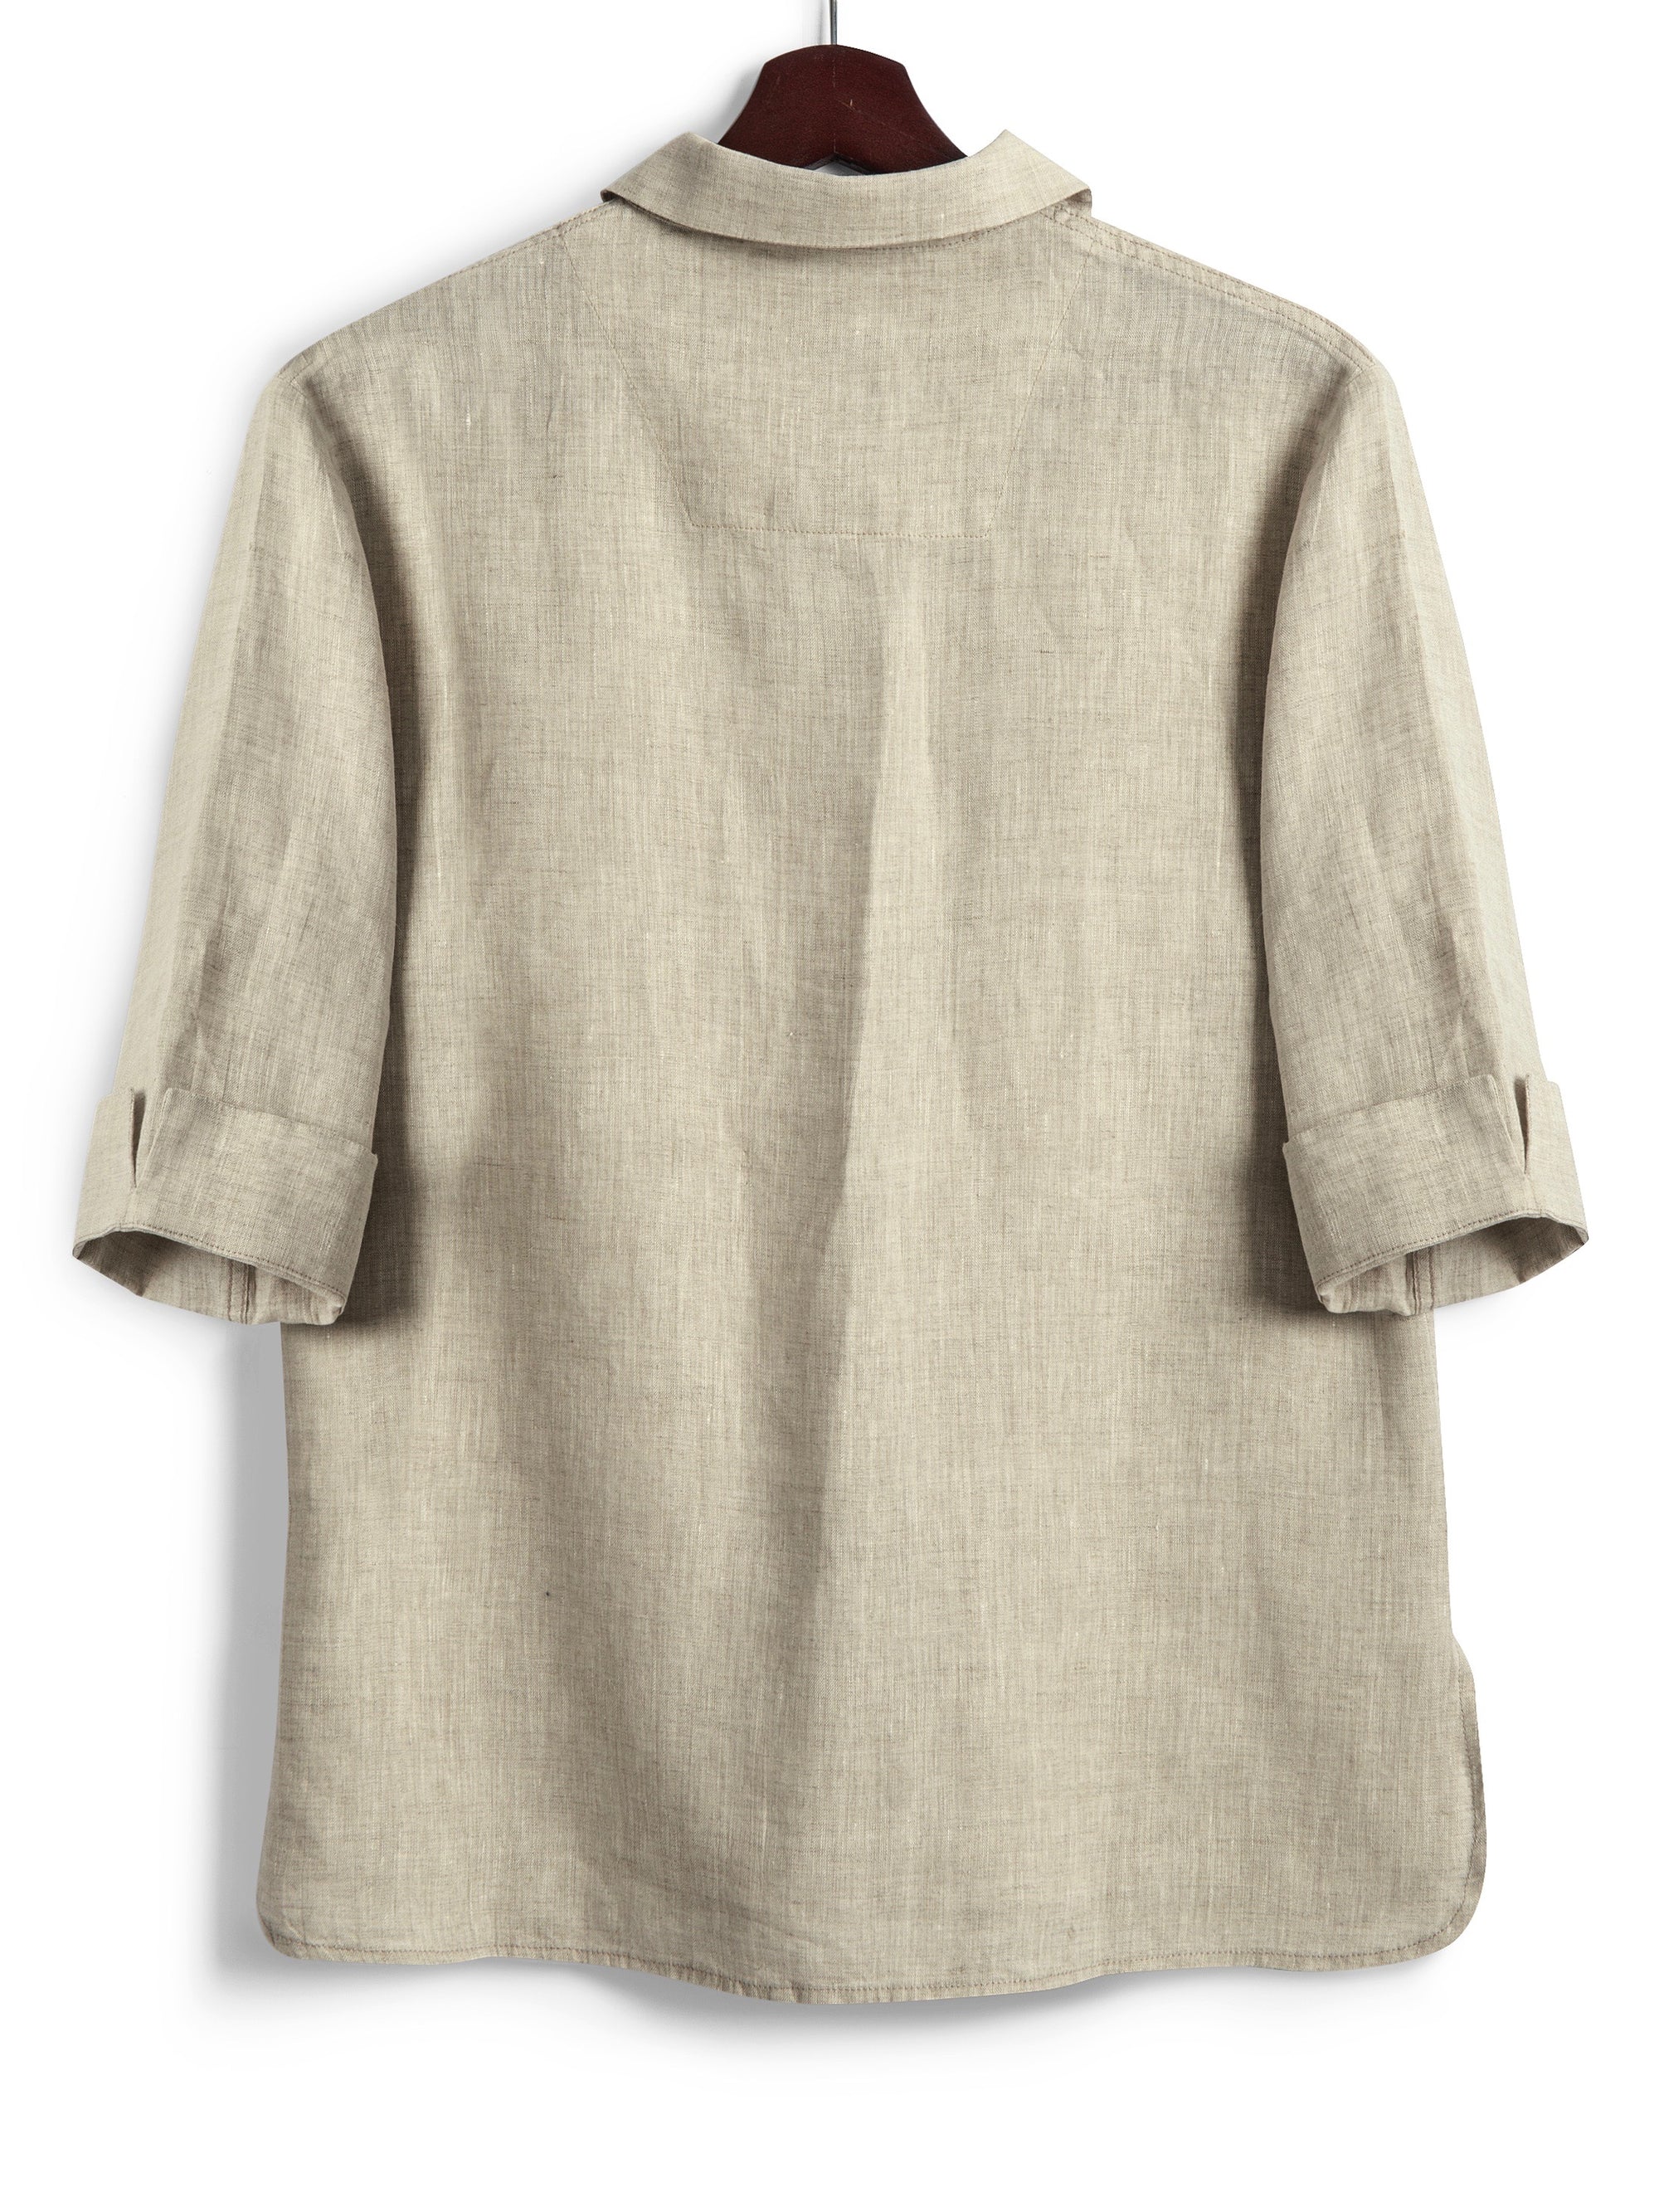 Safari Shirt in Natural Linen, Shirt, Hickman & Bousfield - Hickman & Bousfield, Safari and Travel Clothing